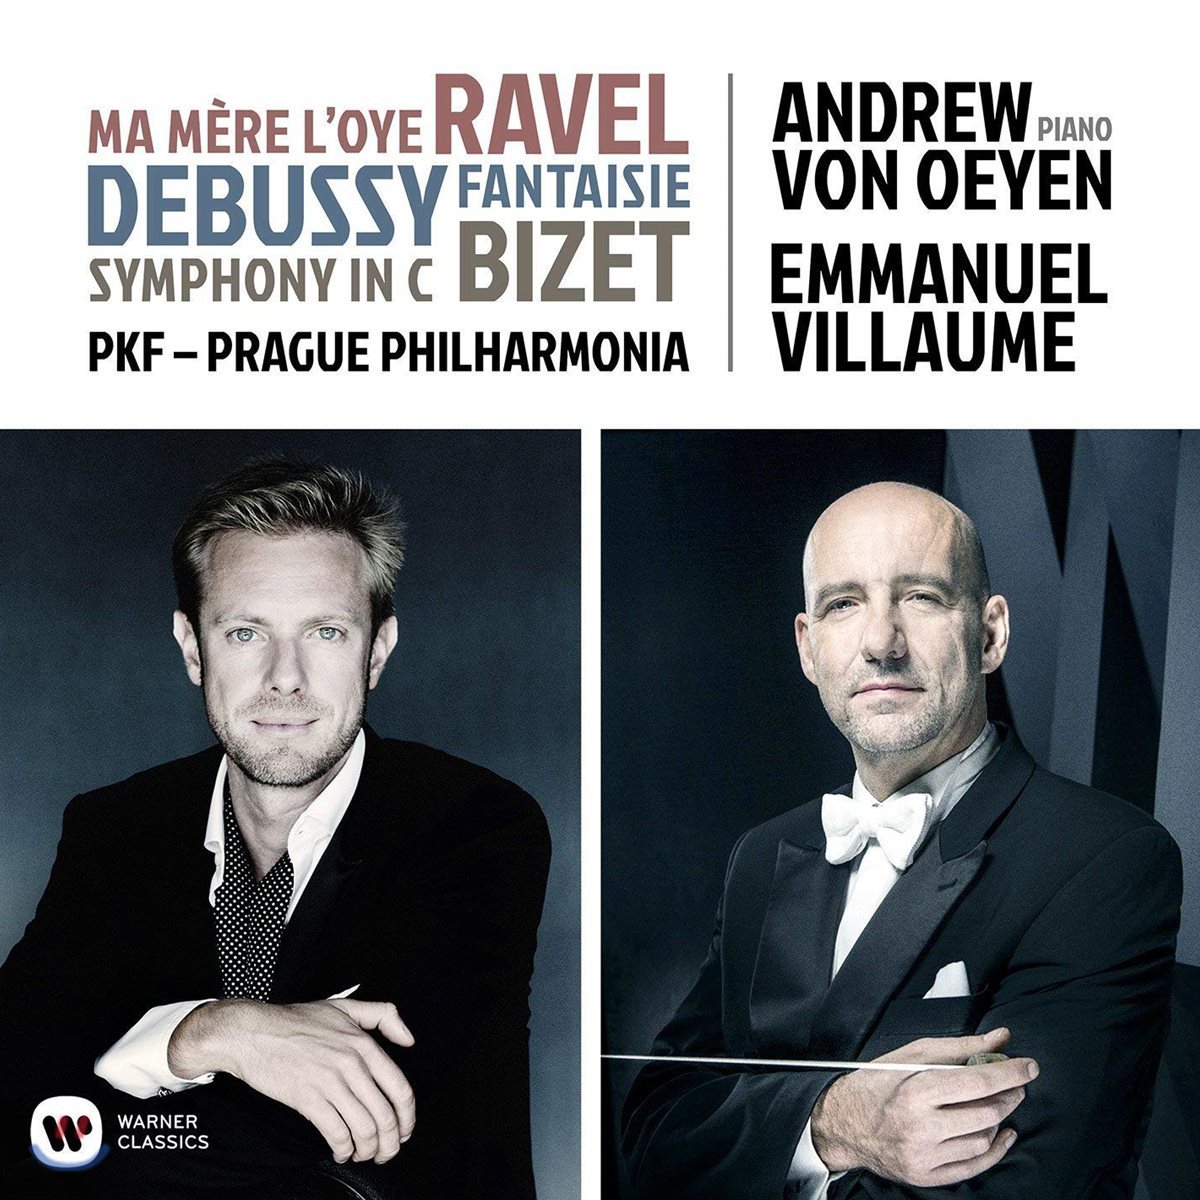 Andrew von Oeyen / Emmanuel Villaume 라벨: 어미 거위 / 드뷔시: 환상곡 / 비제: 교향곡 (Ravel: Ma Mere L&#39;oye / Debussy: Fantaisie / Bizet: Symphony in C)